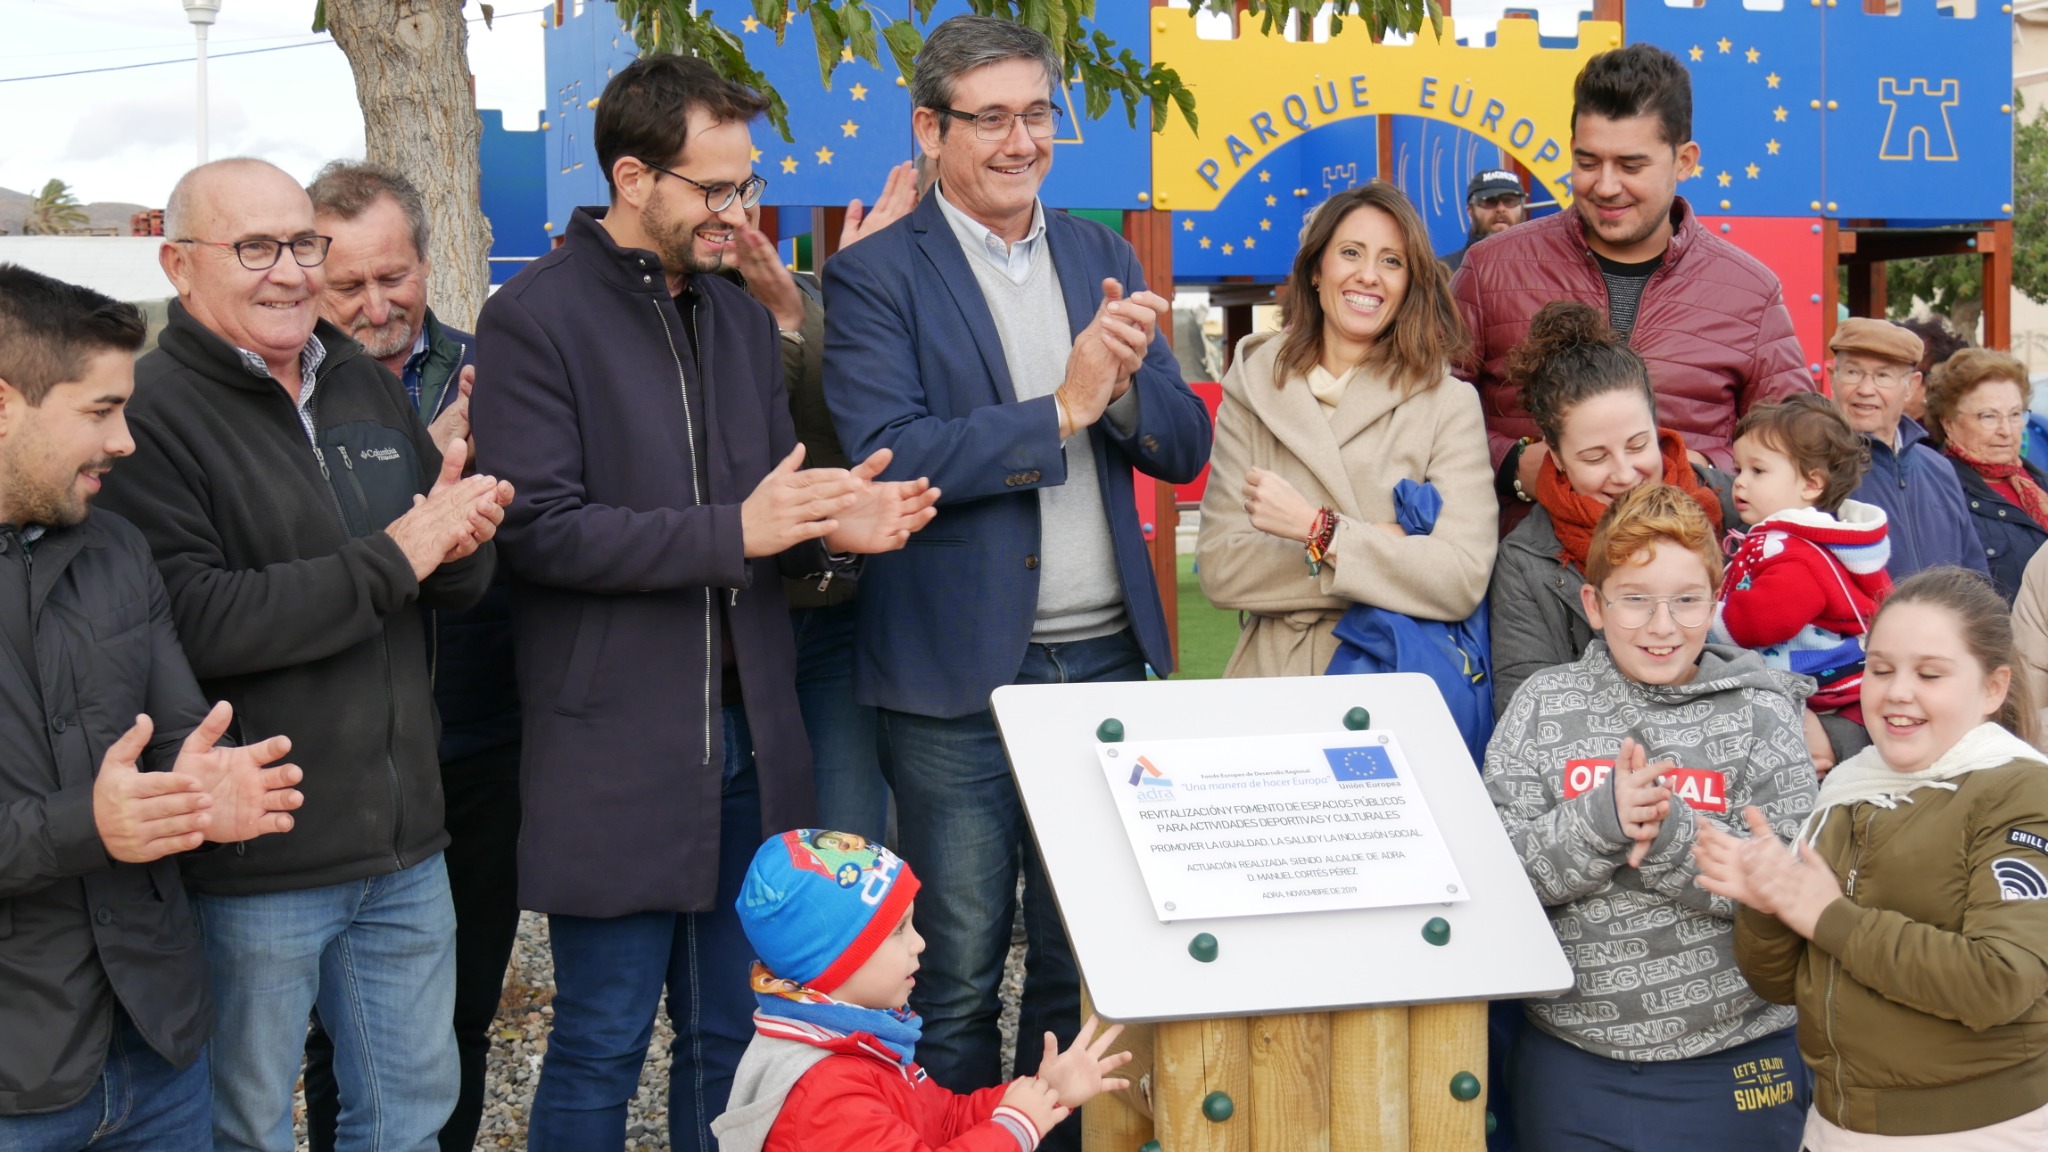 Photo of Adra inaugura su ‘Parque Europa’ con 3.600 m2 y el primer circuito ‘Cross Riders’ del municipio